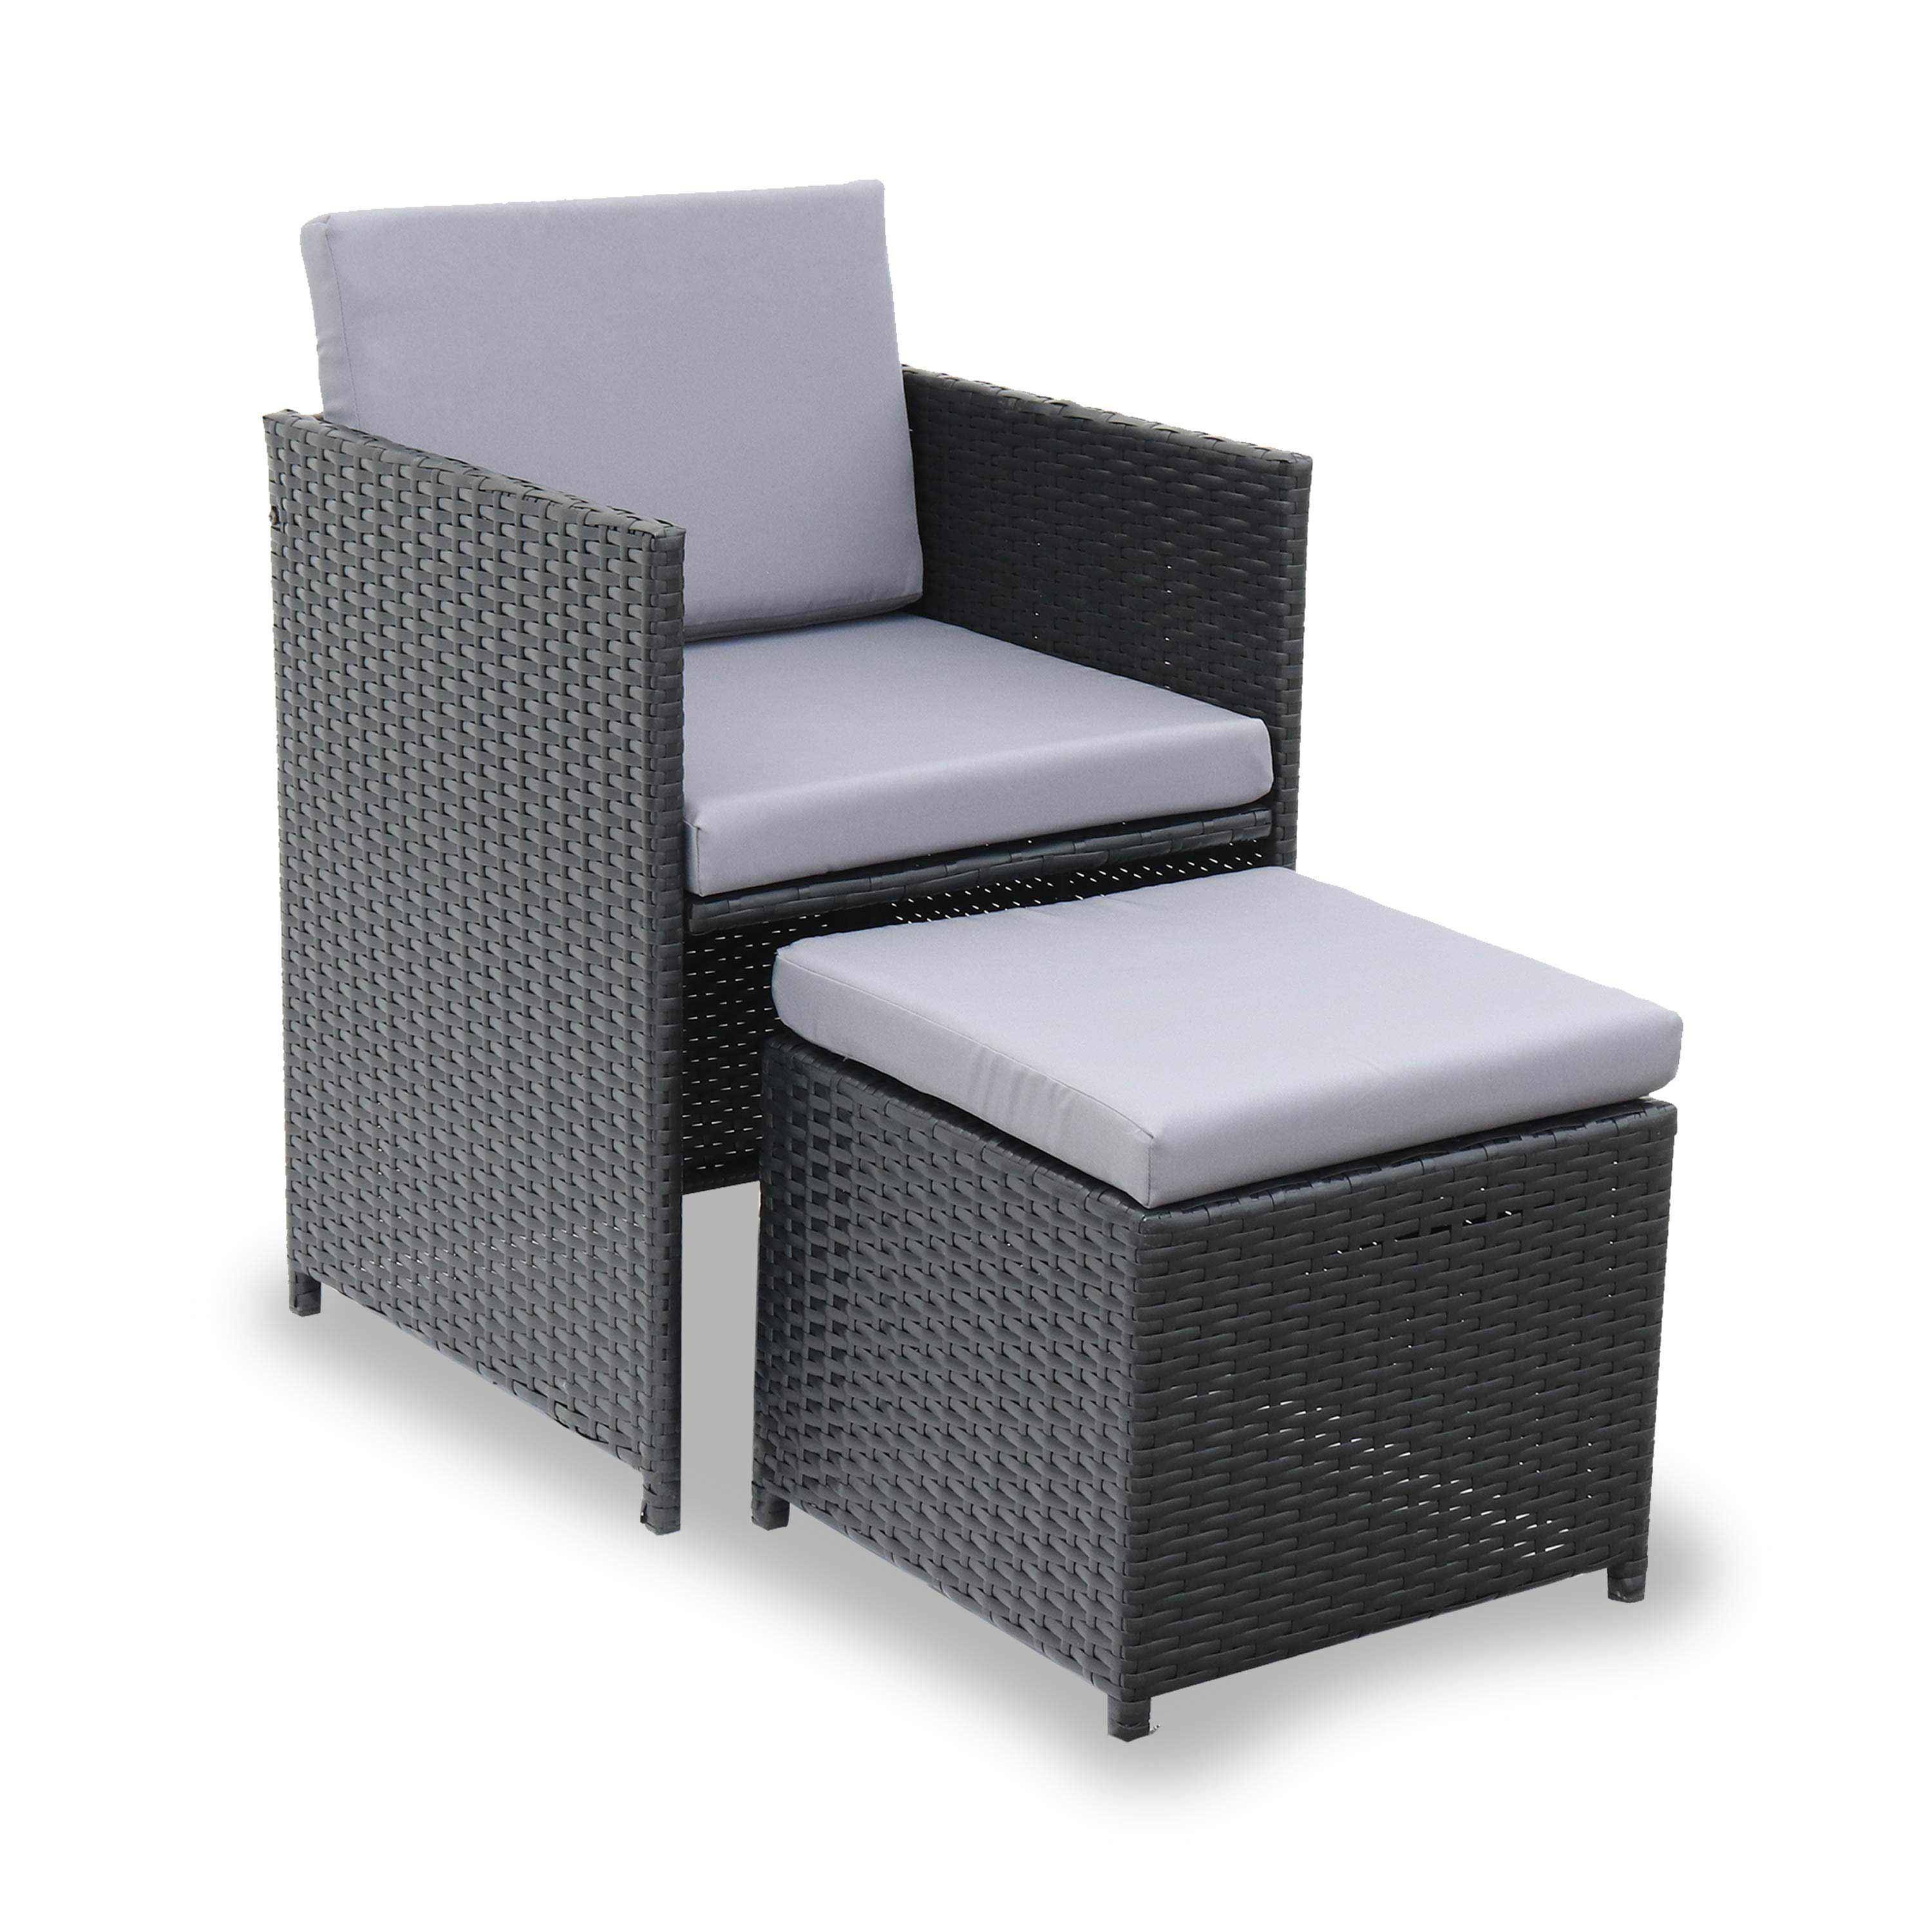 6 to 10-seater rattan cube table set - table, 6 armchairs, 2 footstools - Vabo 10 - Black rattan, Grey cushions,sweeek,Photo5